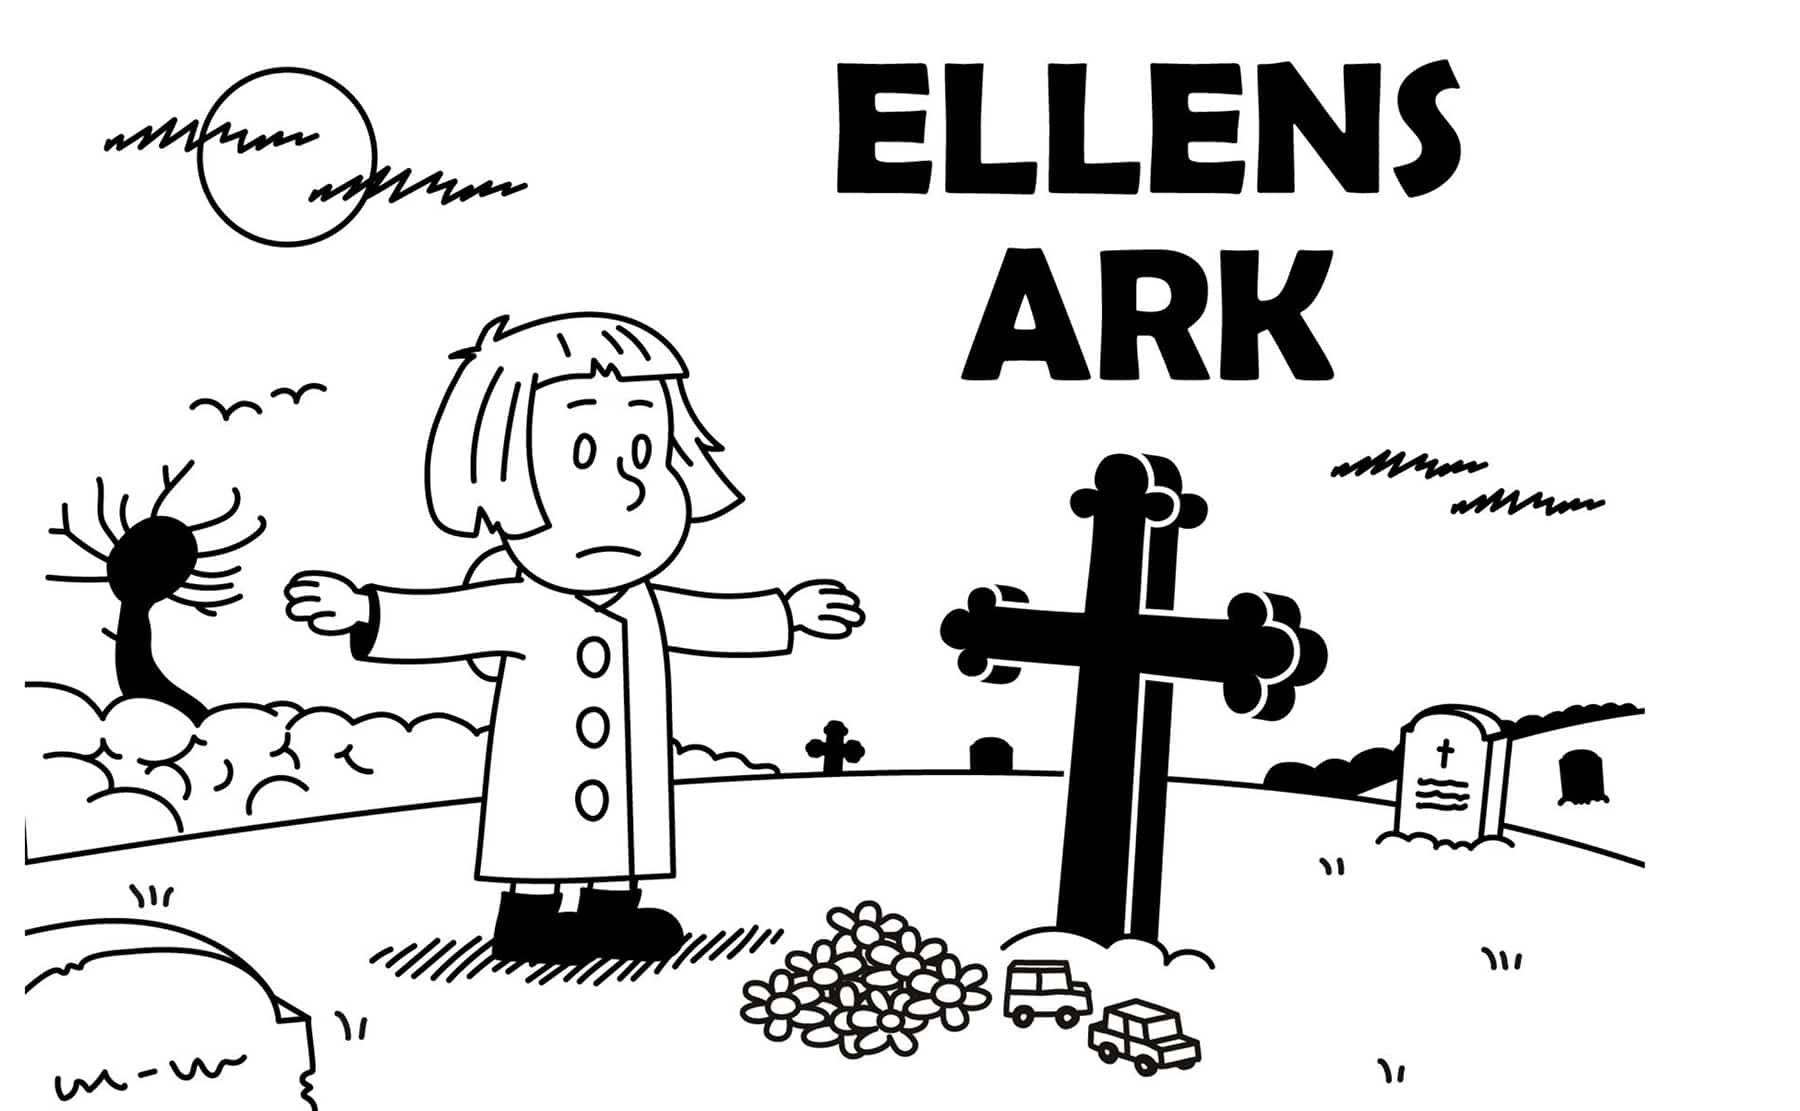 Ellens Ark Poster